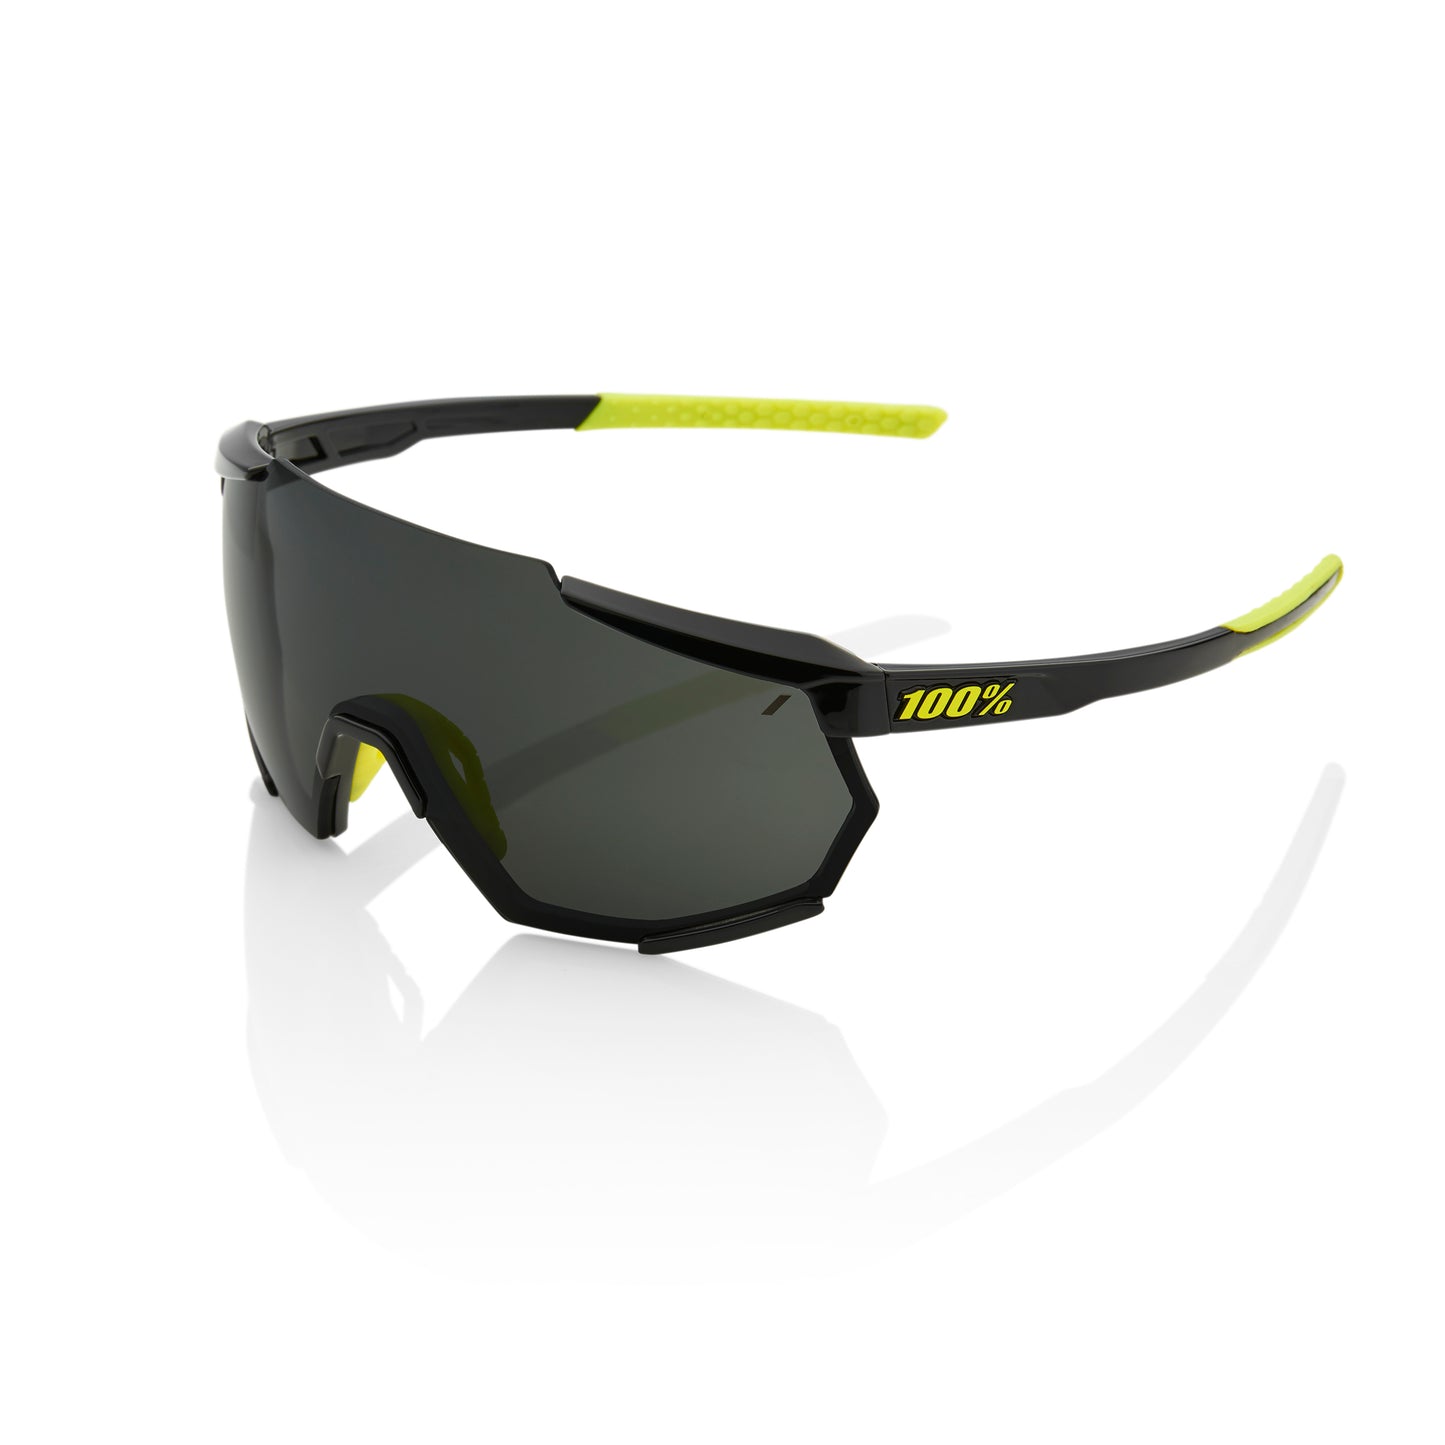 100 Percent Racetrap Sunglasses - One Size Fits Most - Gloss Black - Smoke Lens